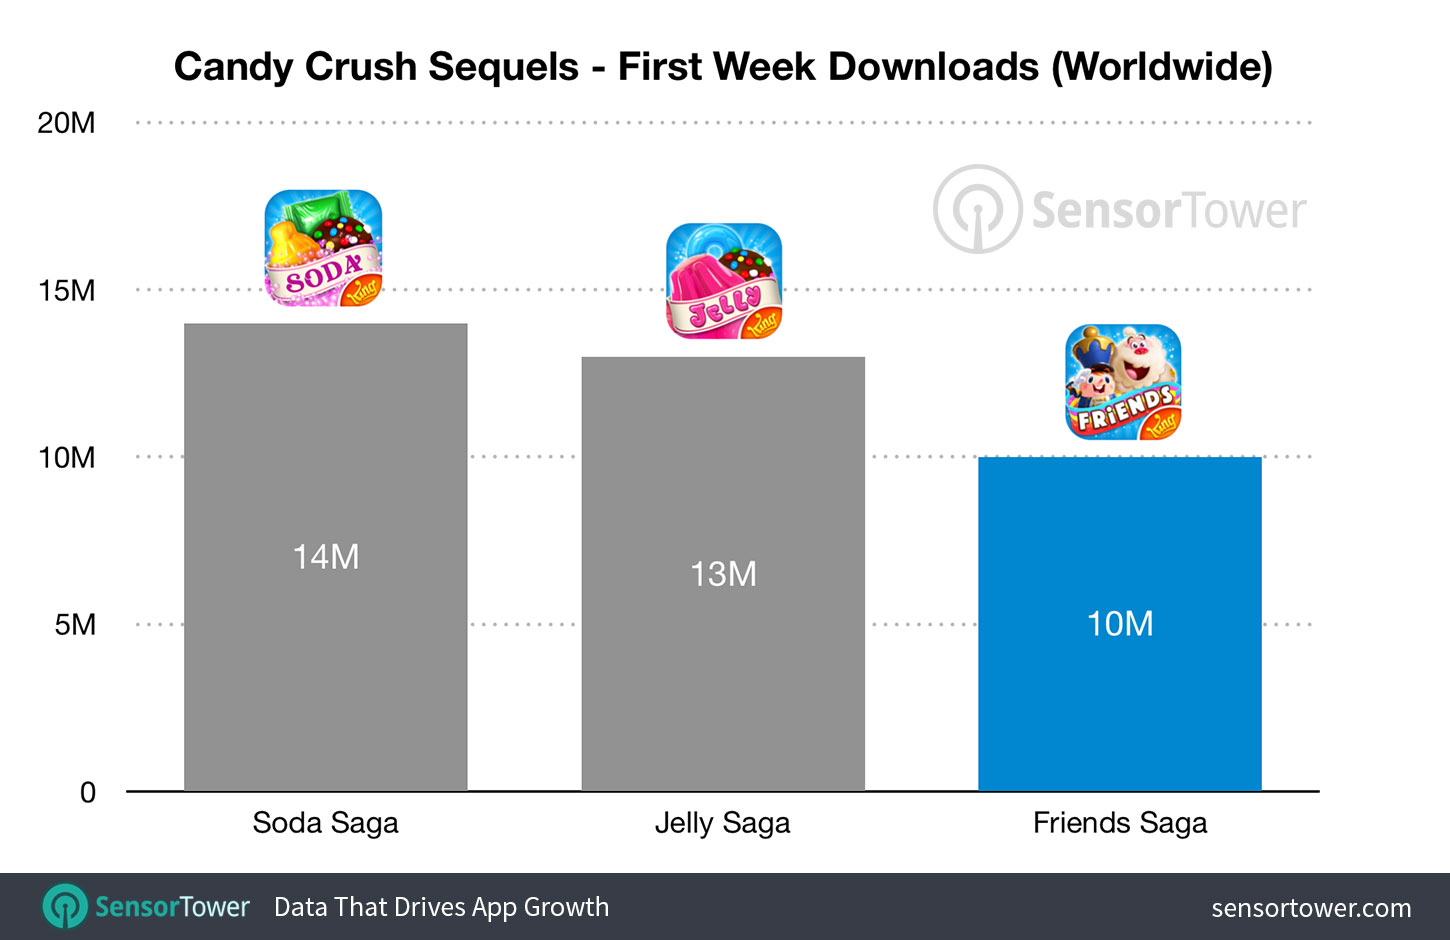 Candy Crush Friends Saga - Apps on Google Play